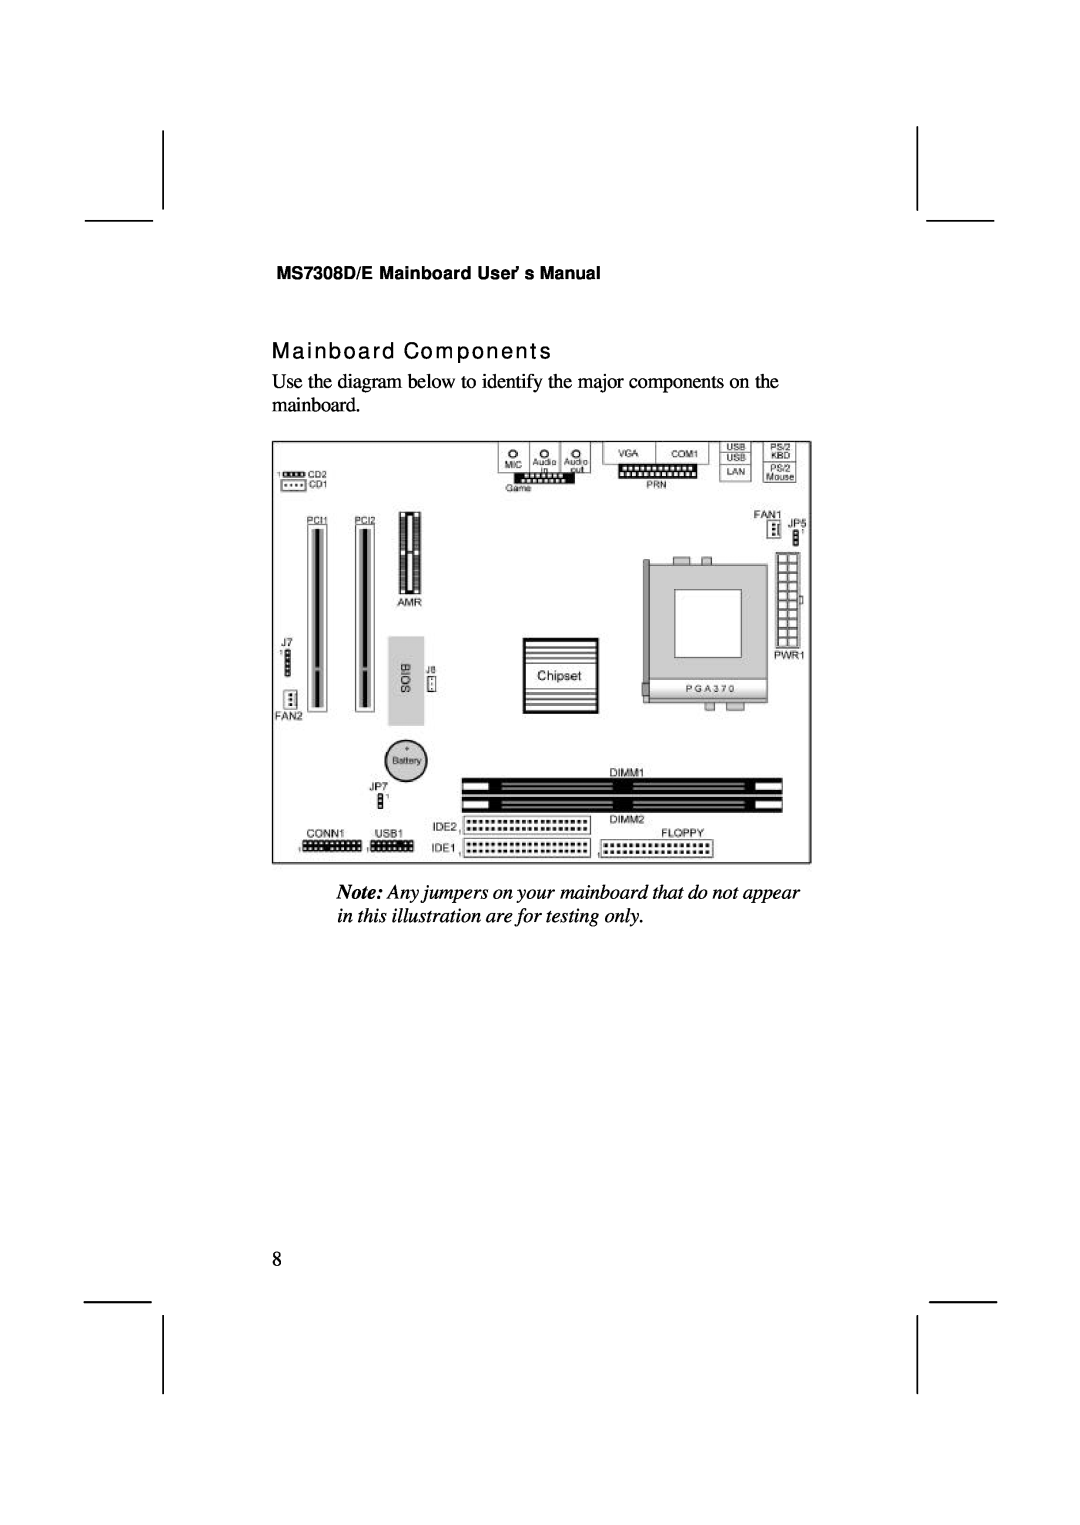 IBM V1.6 S63X/JUNE 2000, MS7308D/E user manual Mainboard Components 